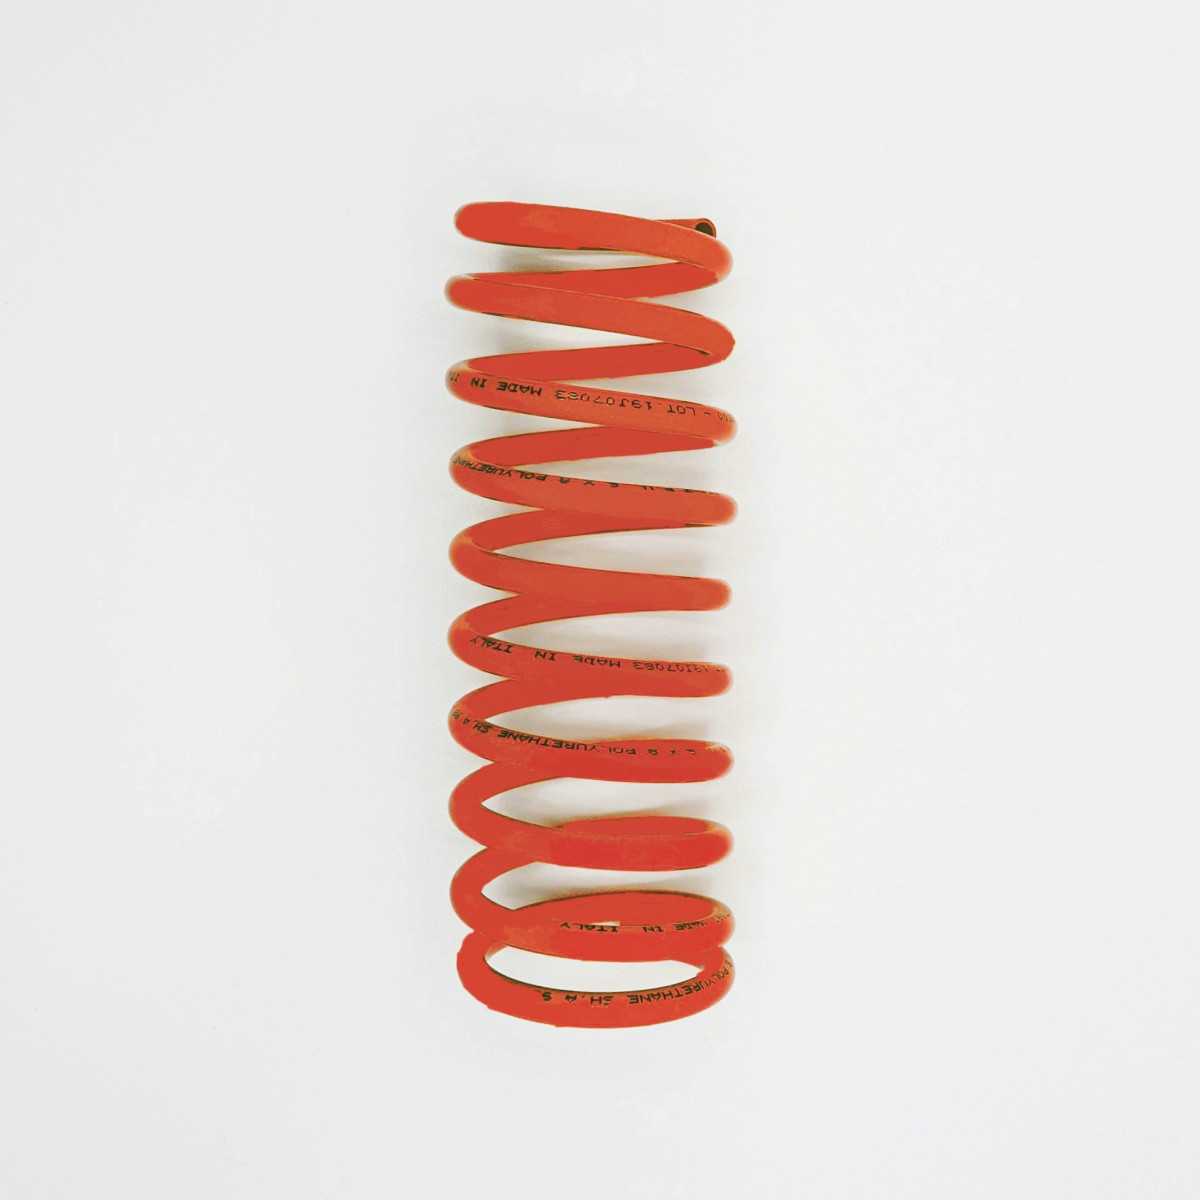 Polyamide spiral hose | Beta Online Shop